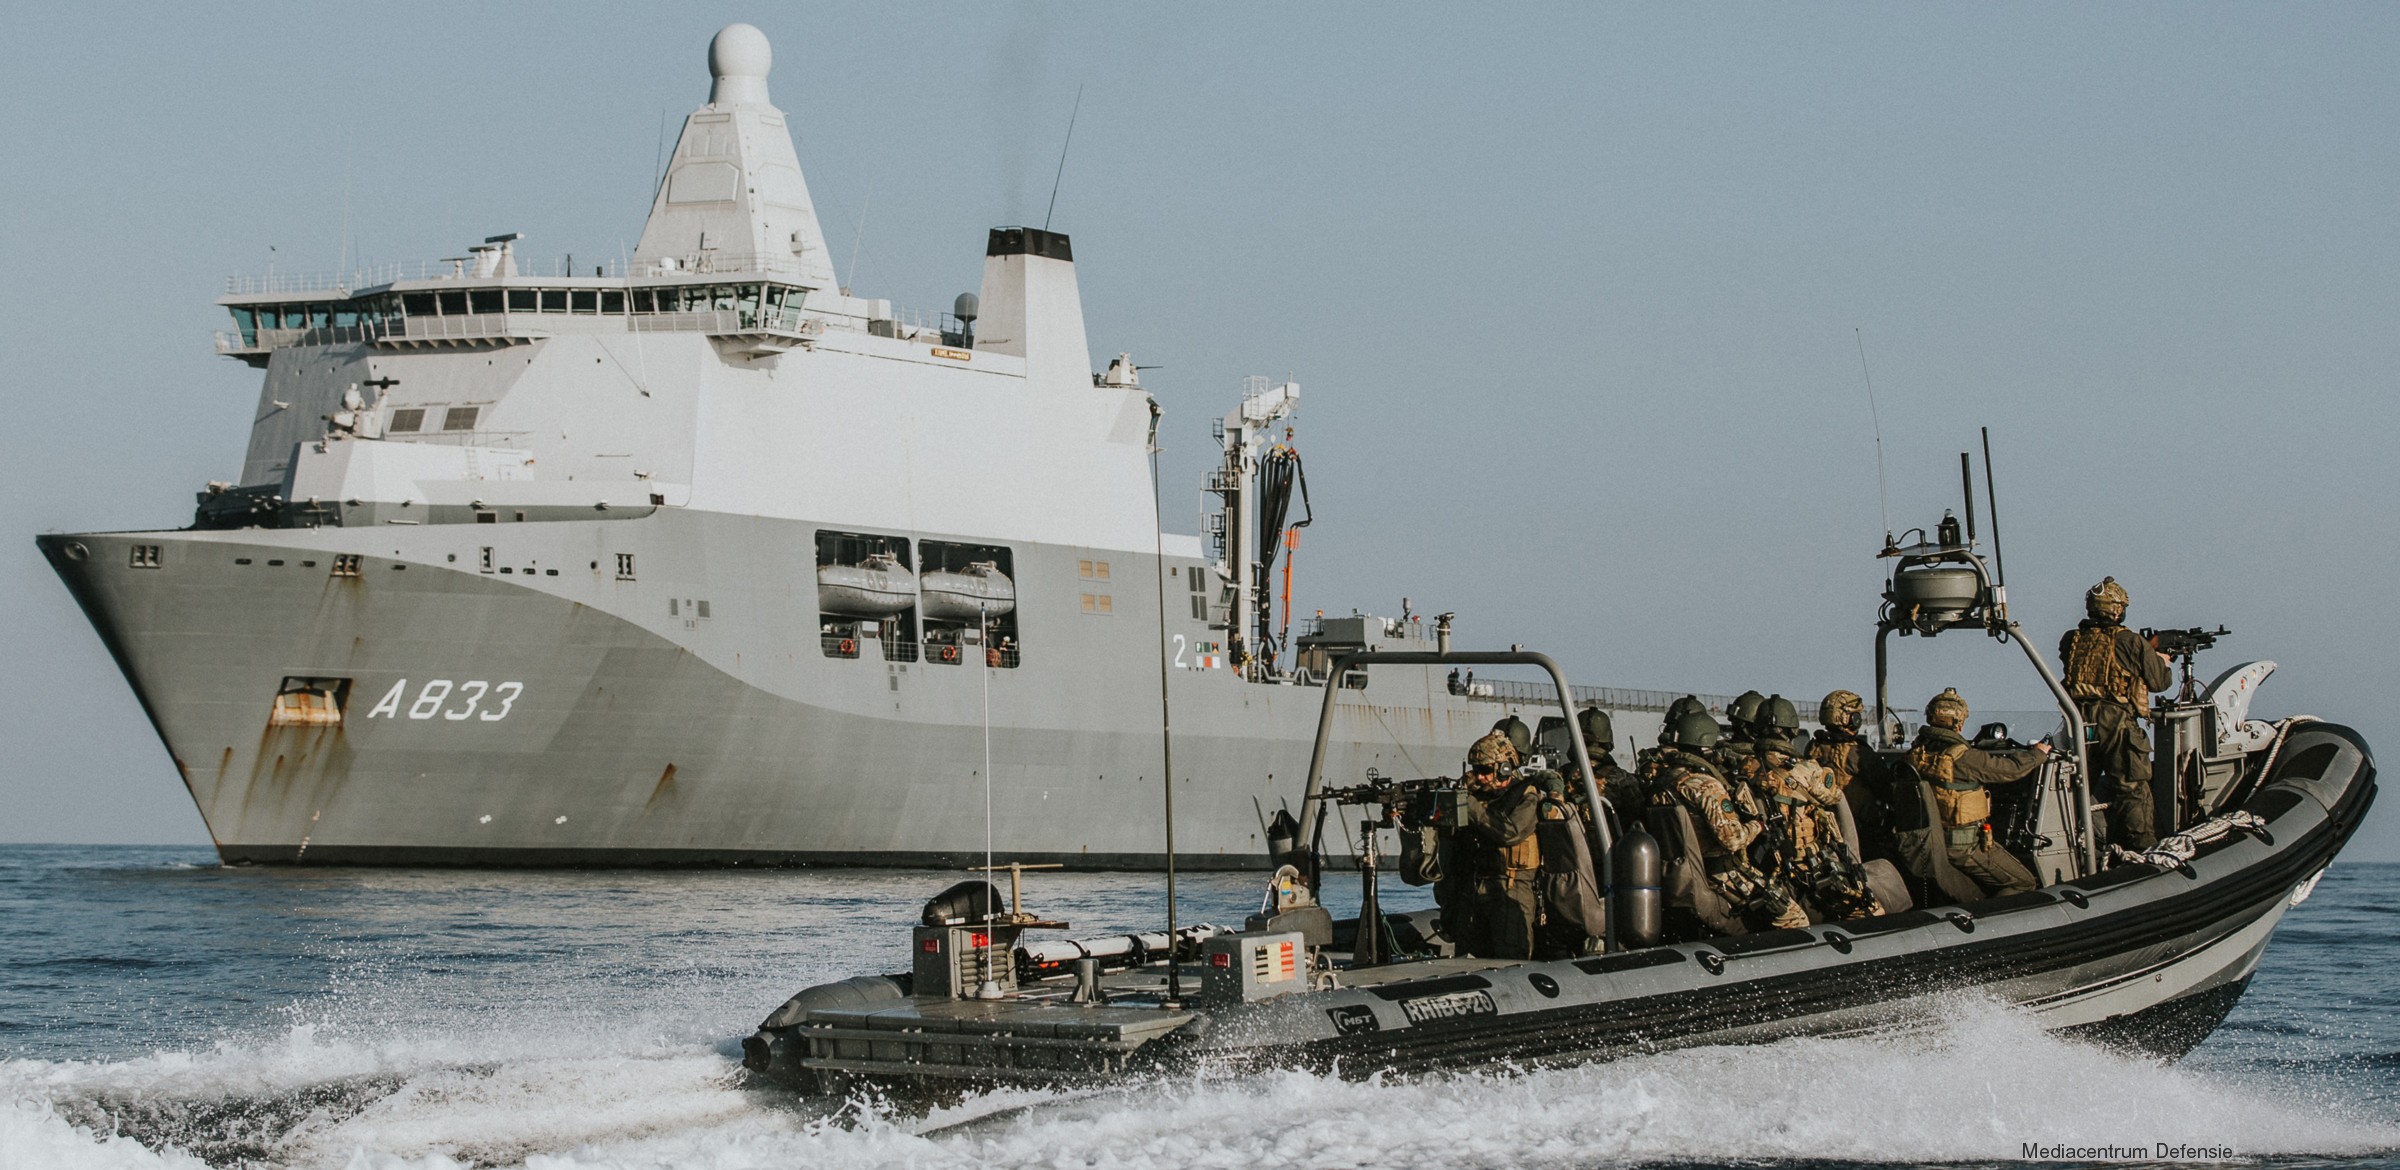 a-833 hnlms karel doorman joint support ship royal netherlands navy koninklijke marine 02 rhib